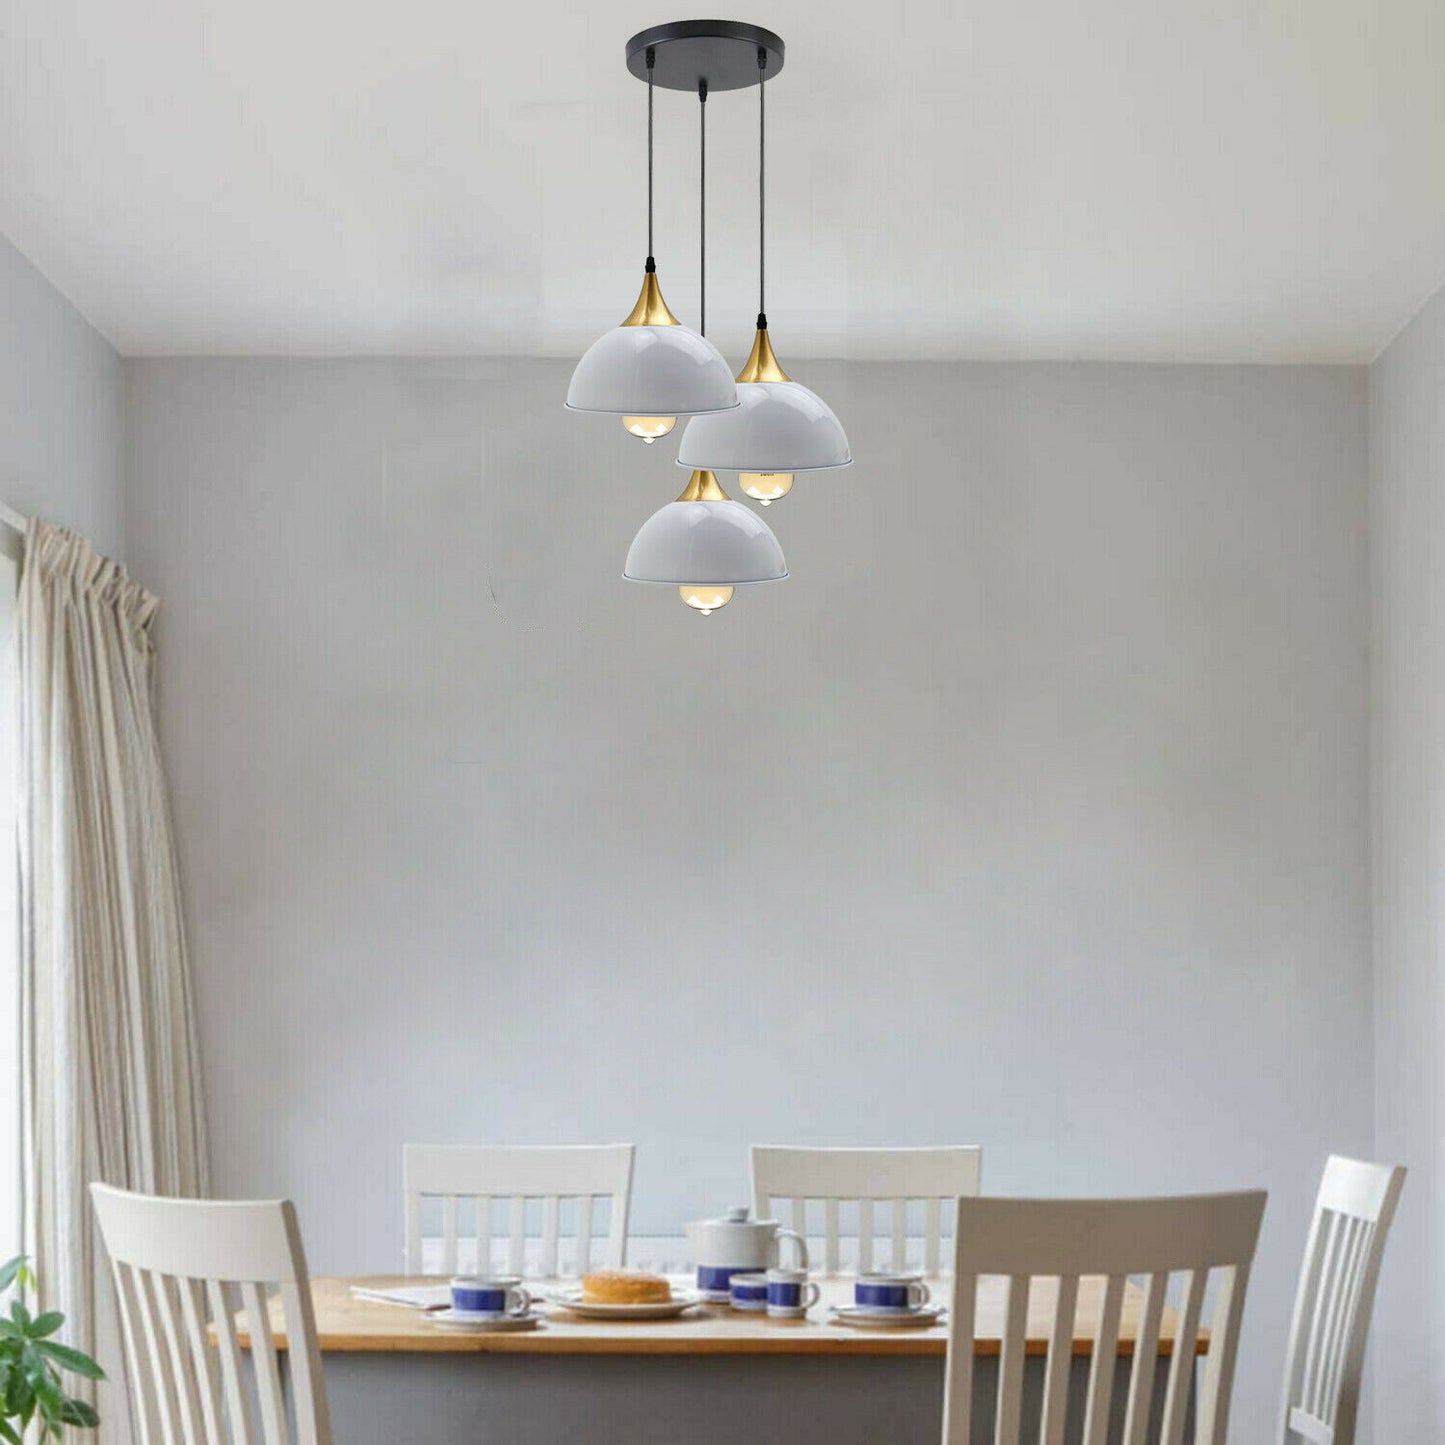 3 Way Vintage Industrial Metal Lampshade Modern Hanging Retro Ceiling Pendant Lights White~2580